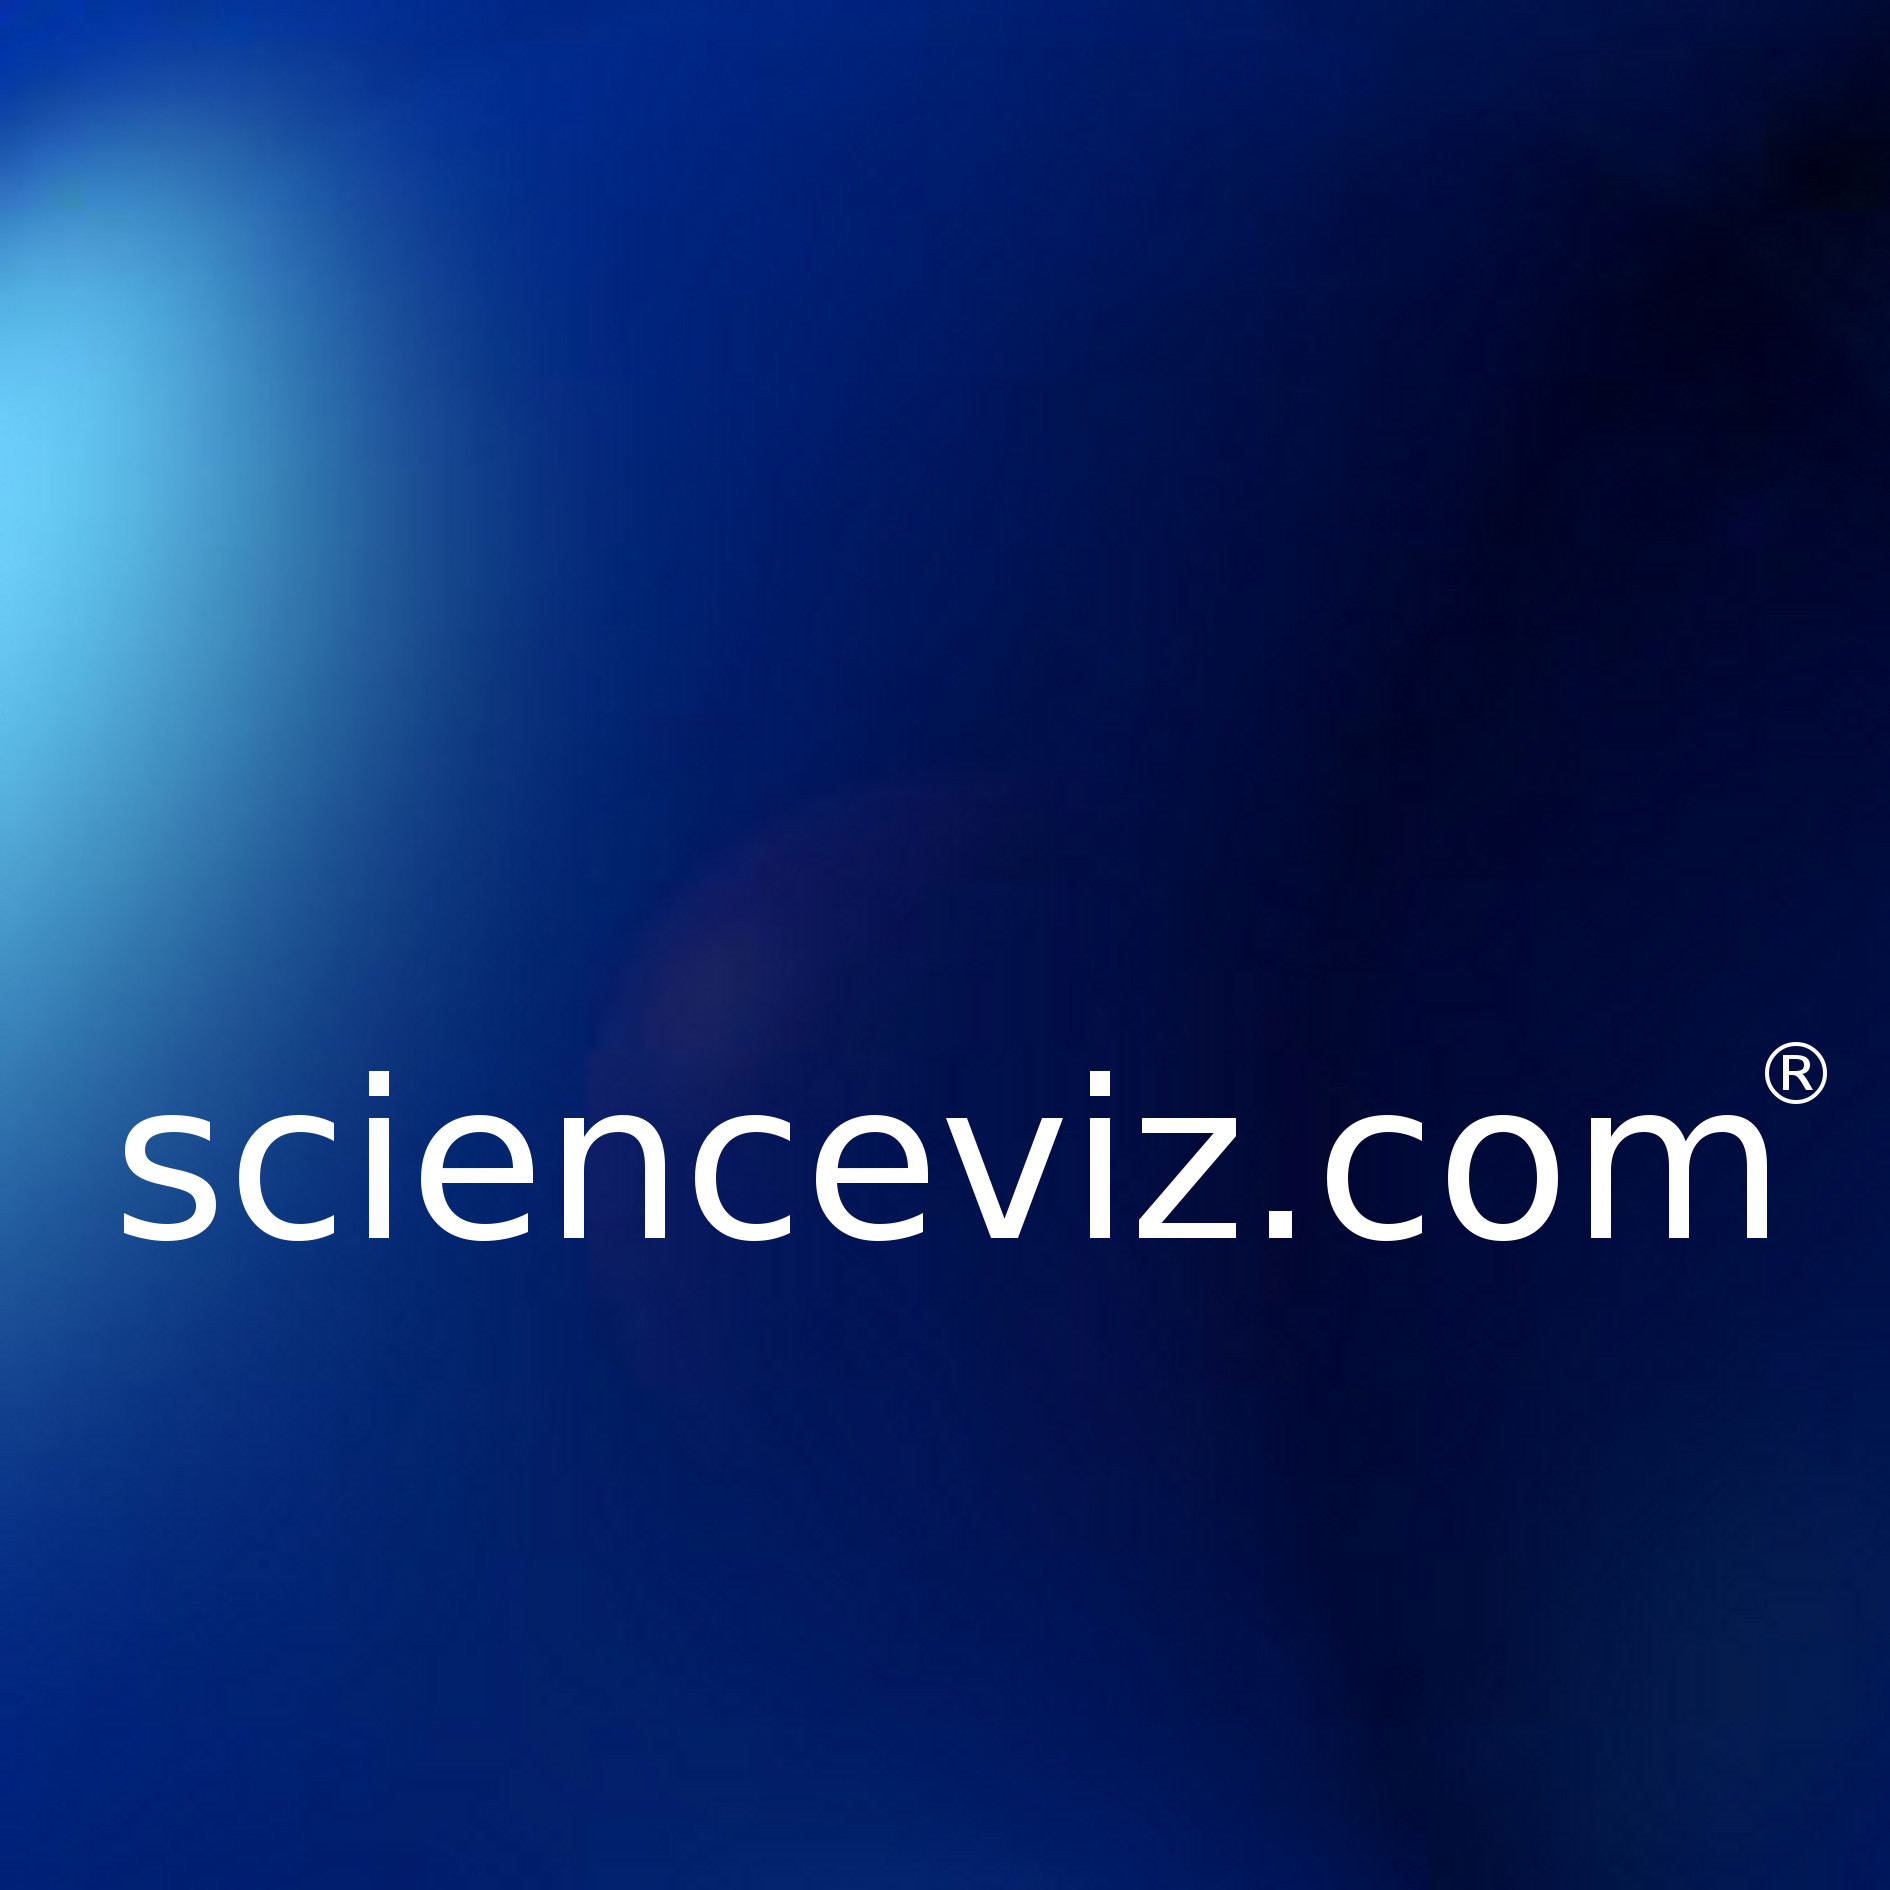 scienceviz.com